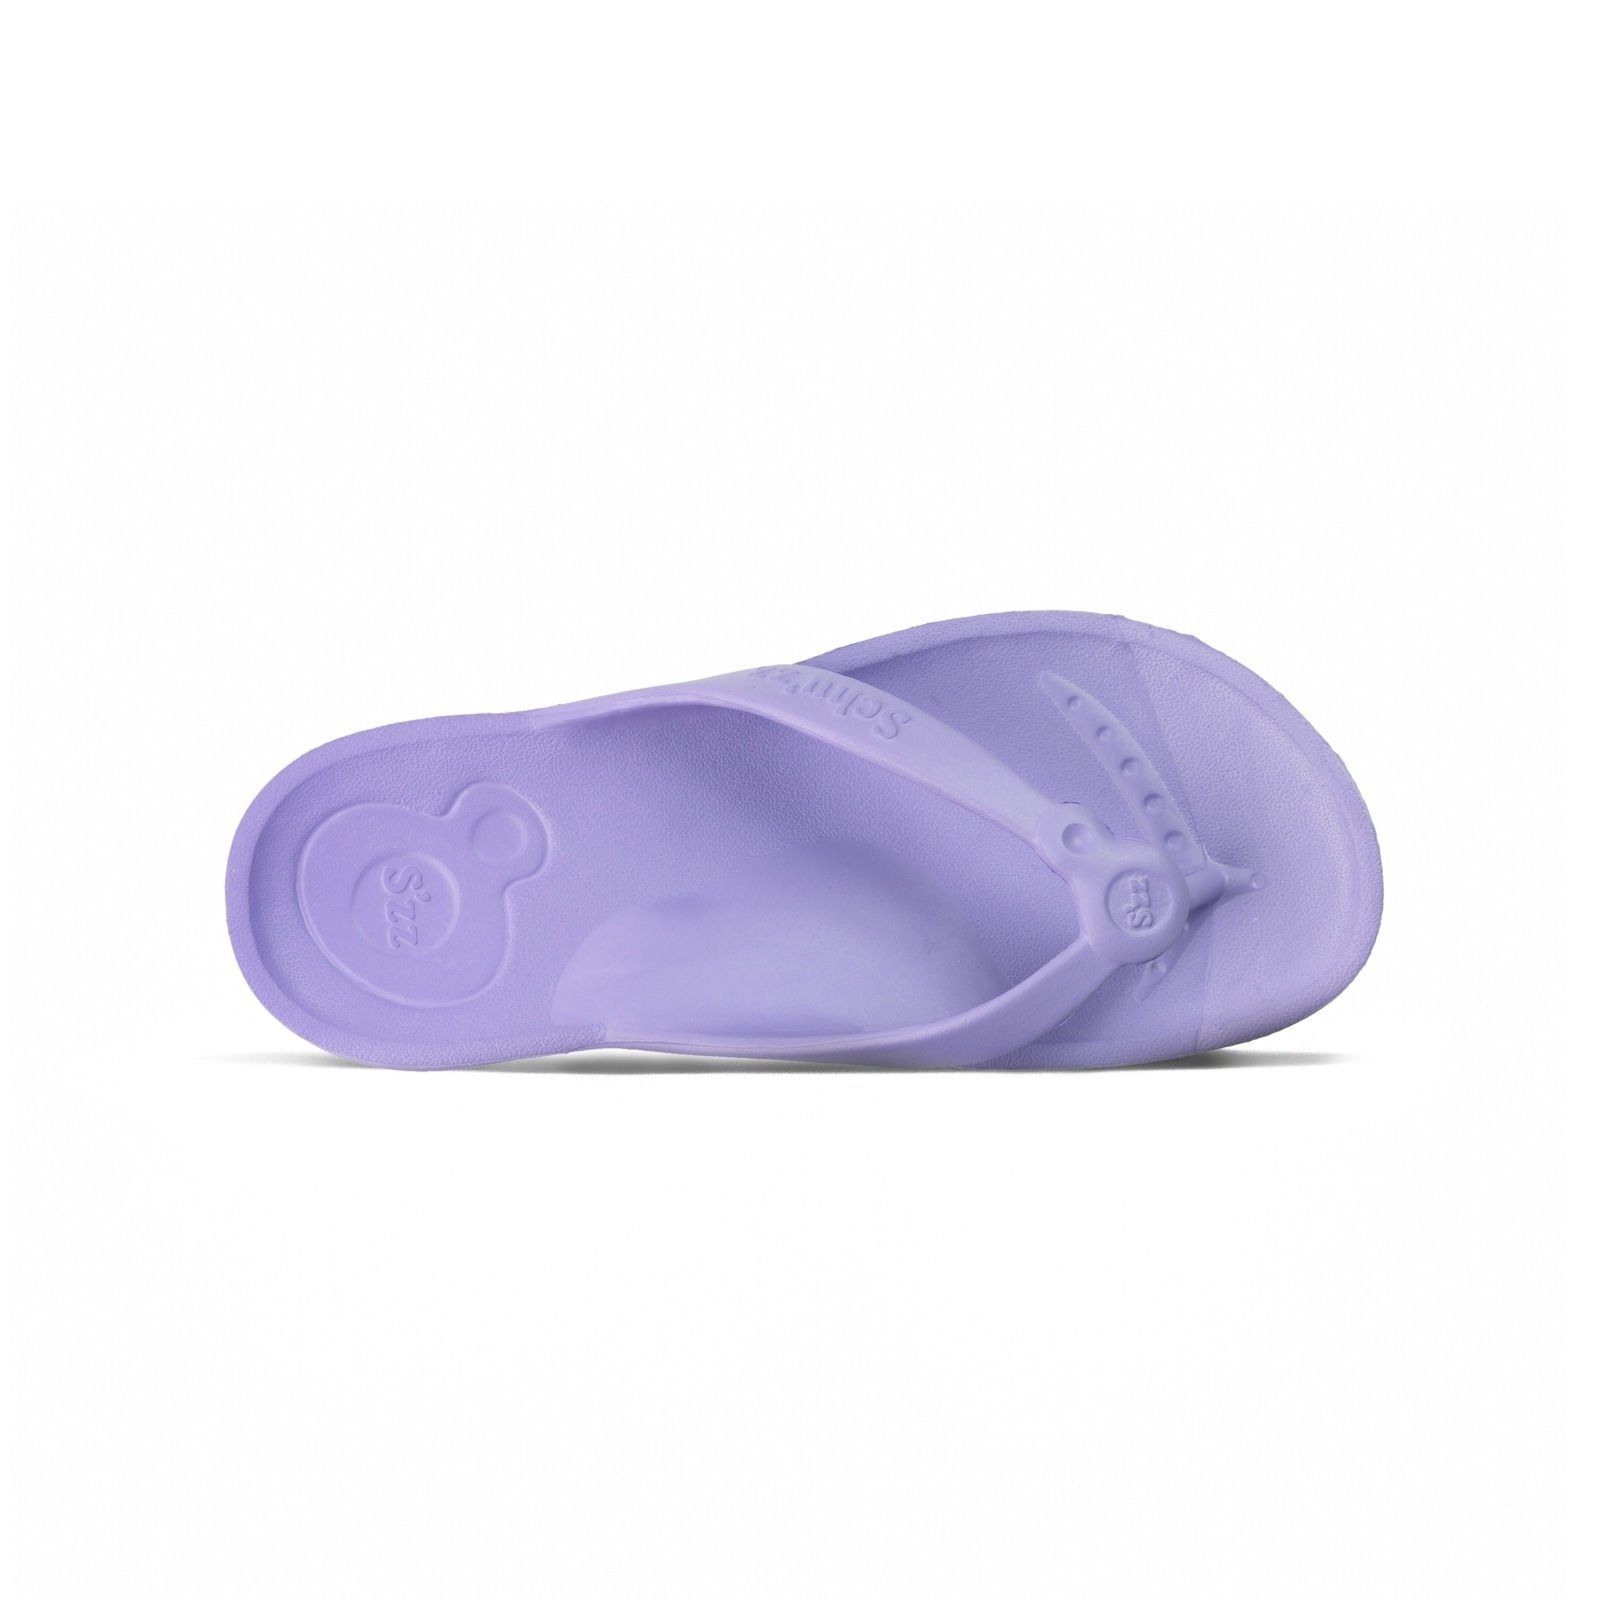 Sandale TONG lila - für Zehensandale Damen - Schuzz